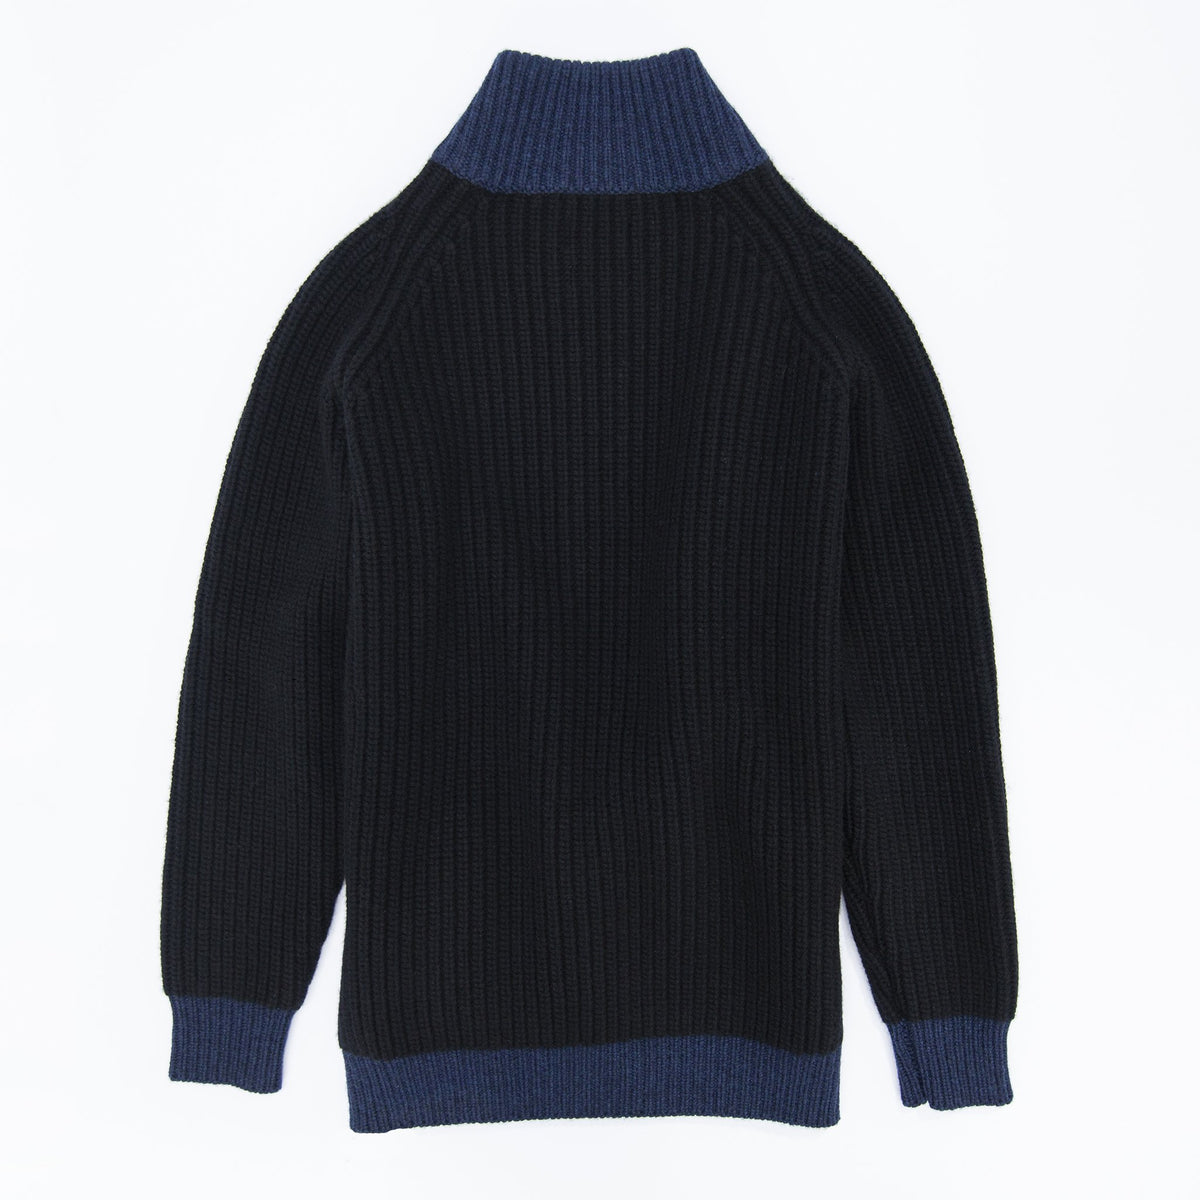 Full-Zip 6-Ply Sweater - Black / Navy knitwear Commonwealth Proper